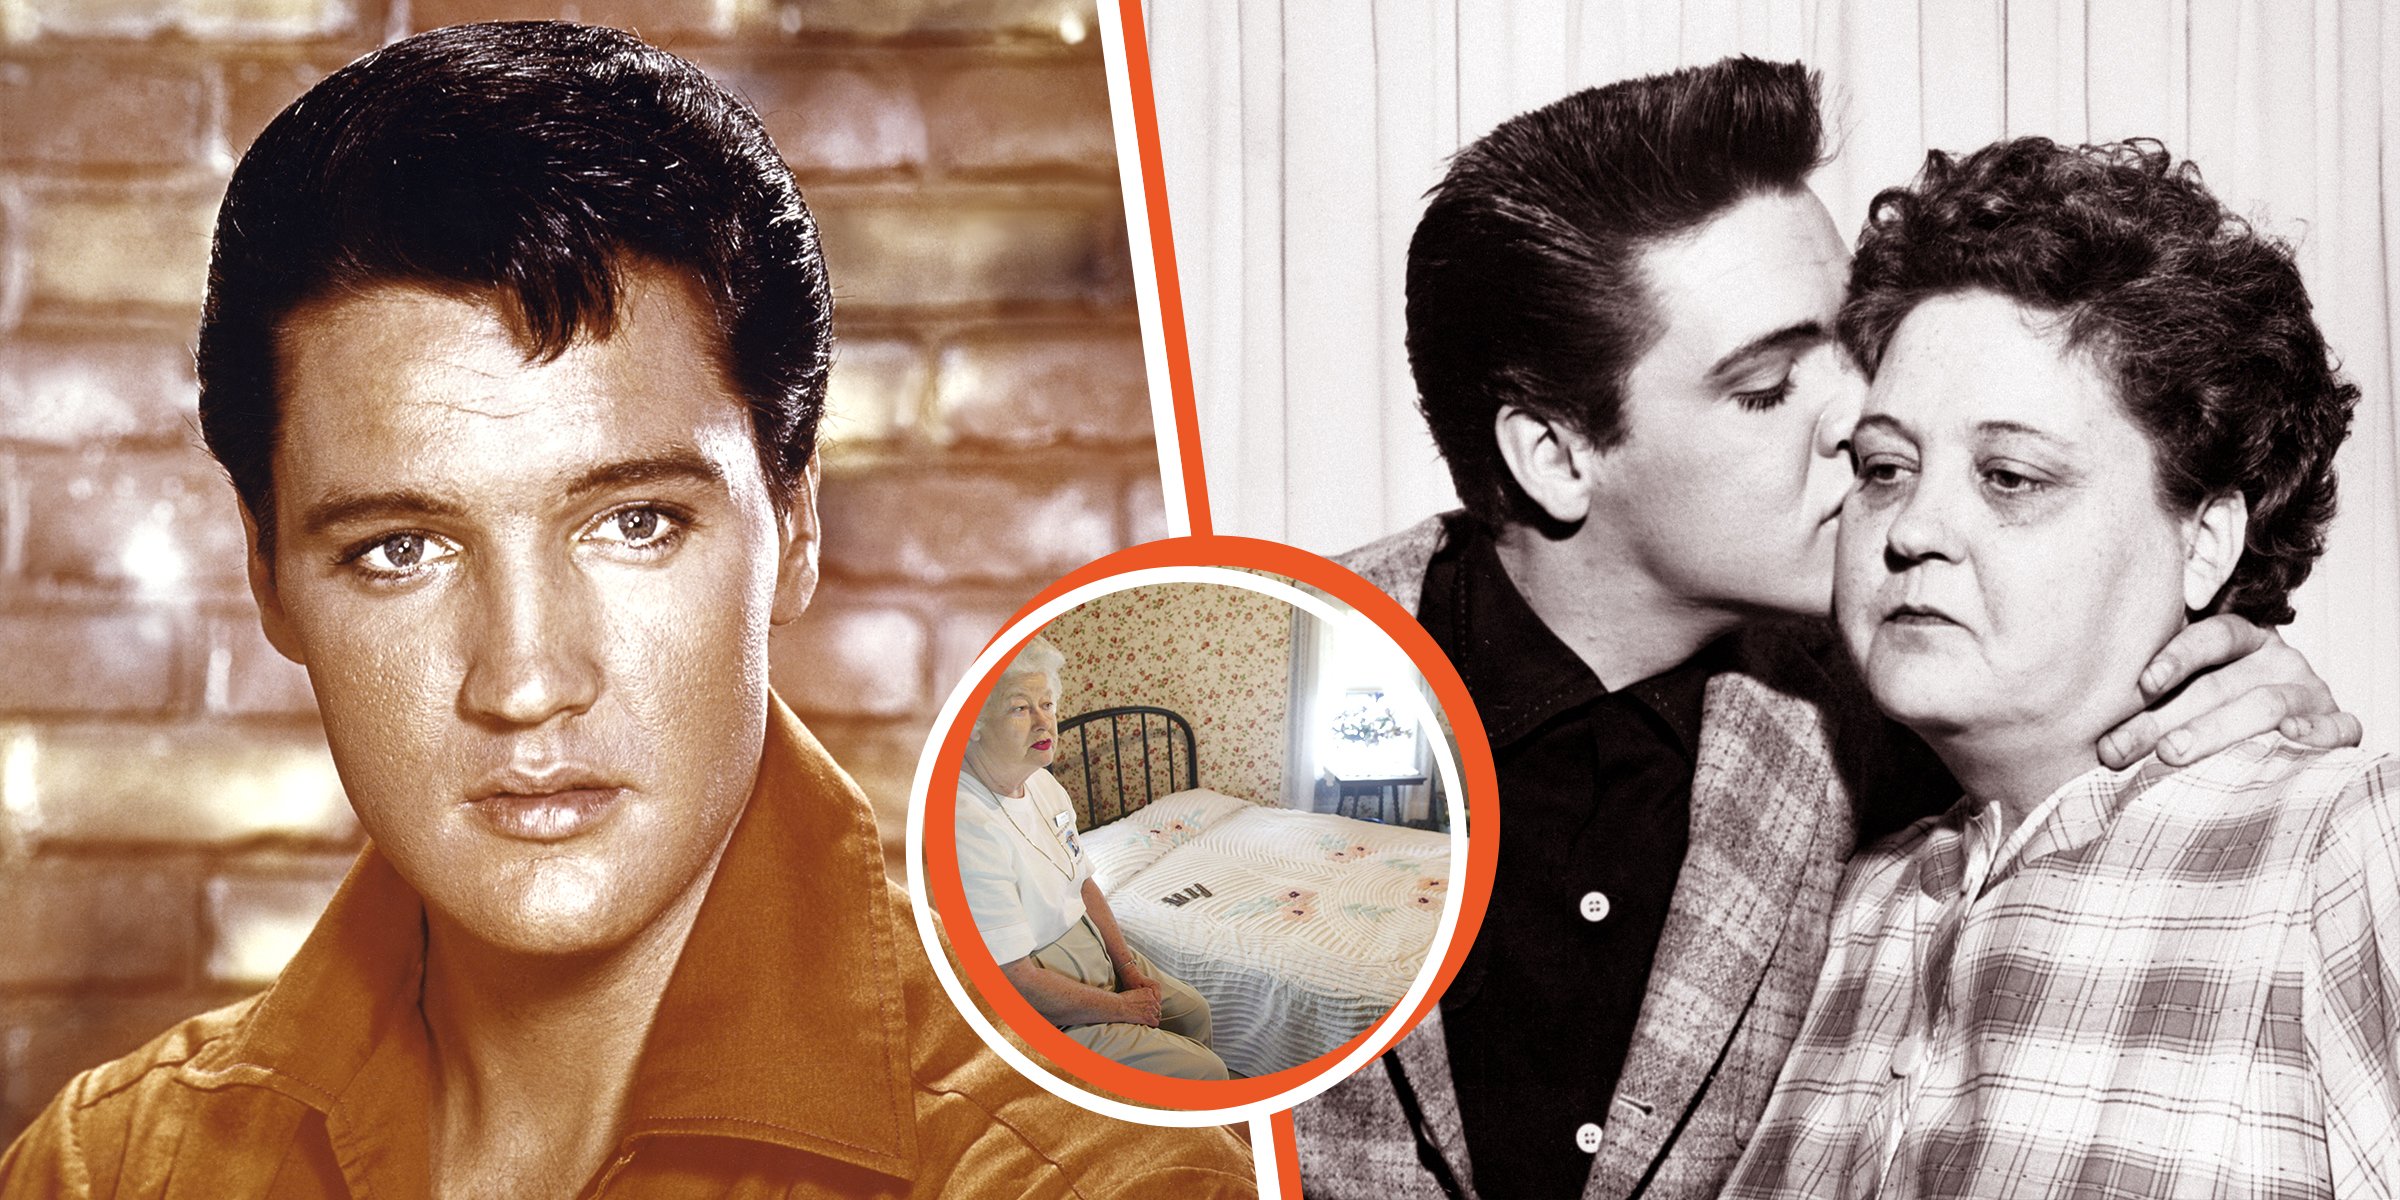 Elvis Presley | Tour guide in room Elvis Presley was born | Elvis Presley and his mother | Source: Getty Images